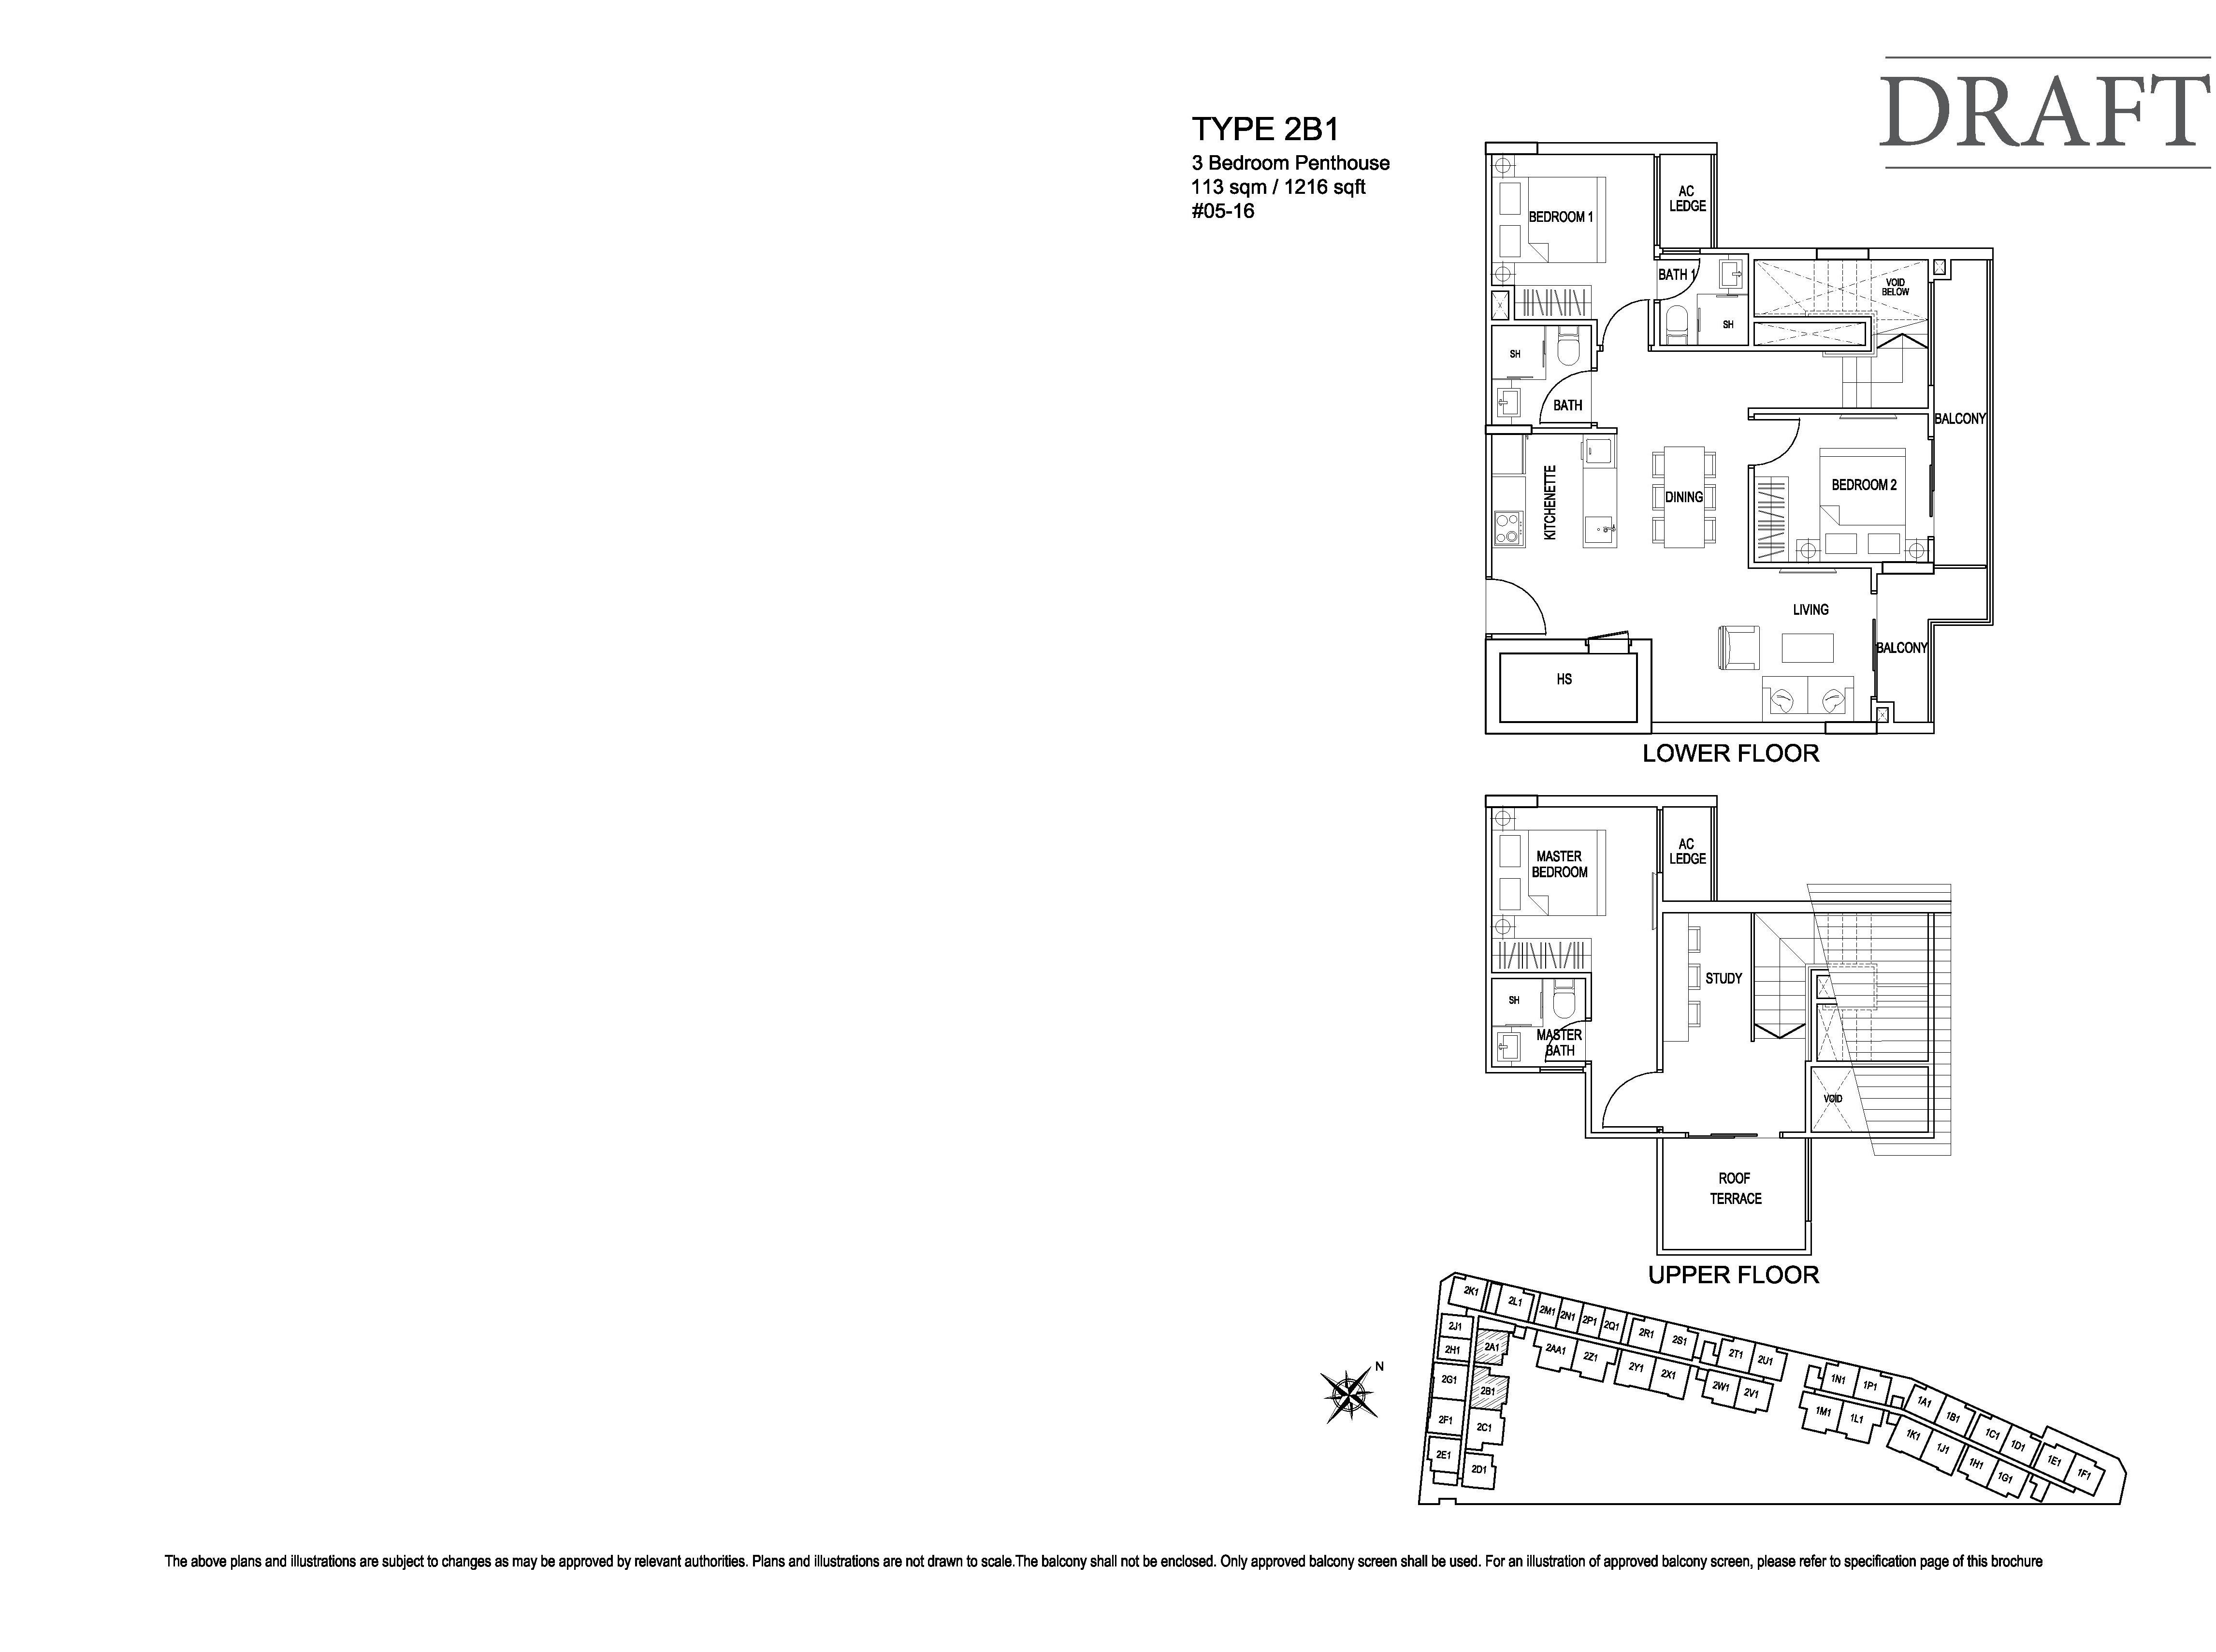 Kensington Square 3 Bedroom Penthouse Floor Plans Type 2B1